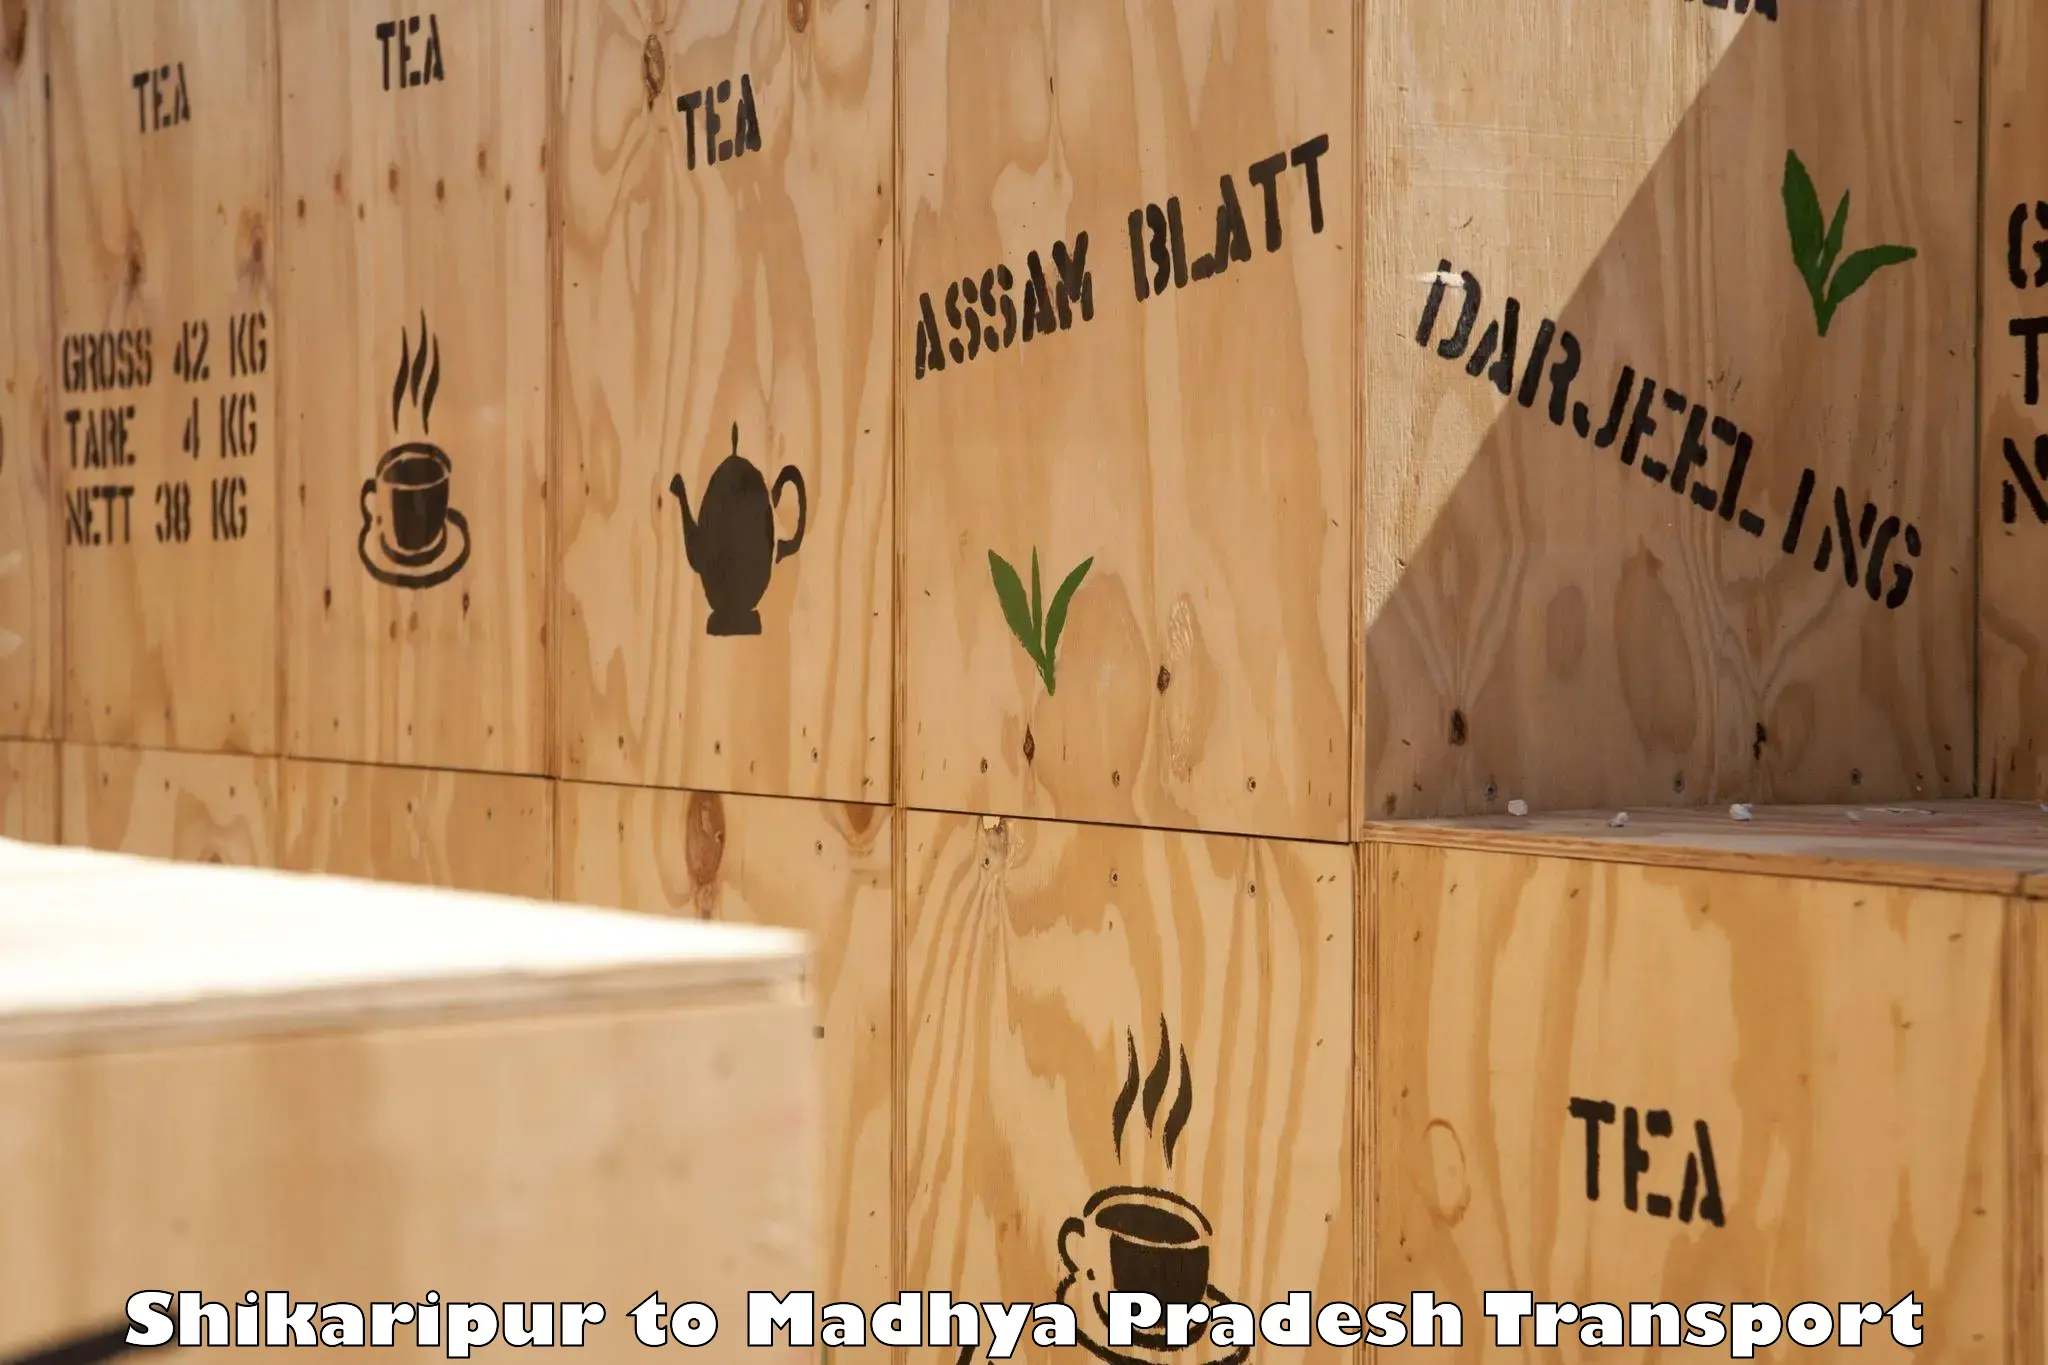 Container transport service Shikaripur to Lashkar